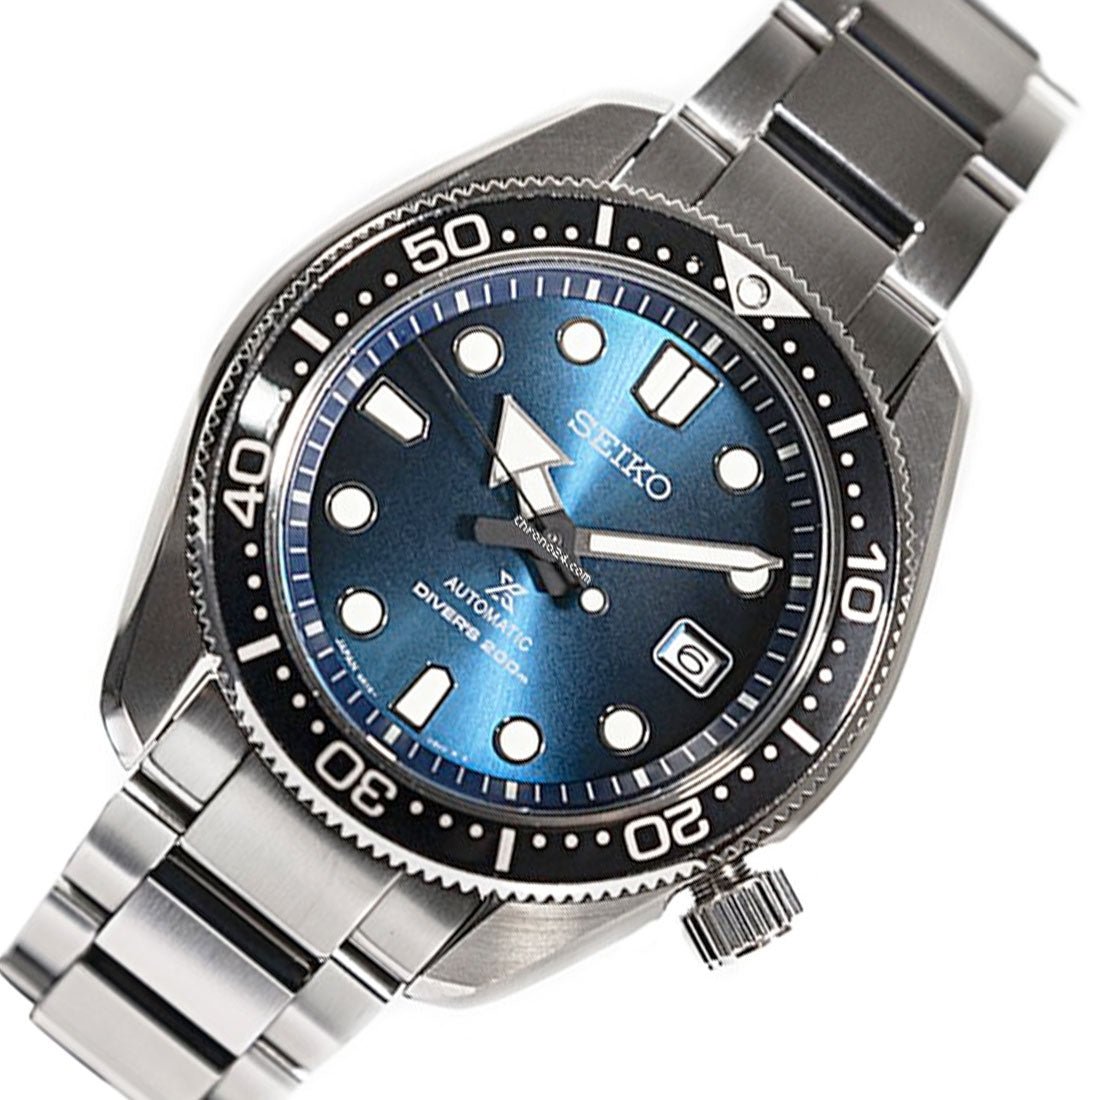 Seiko Prospex Automatic Divers JDM Watch SBDC065 (SPB083) -Seiko